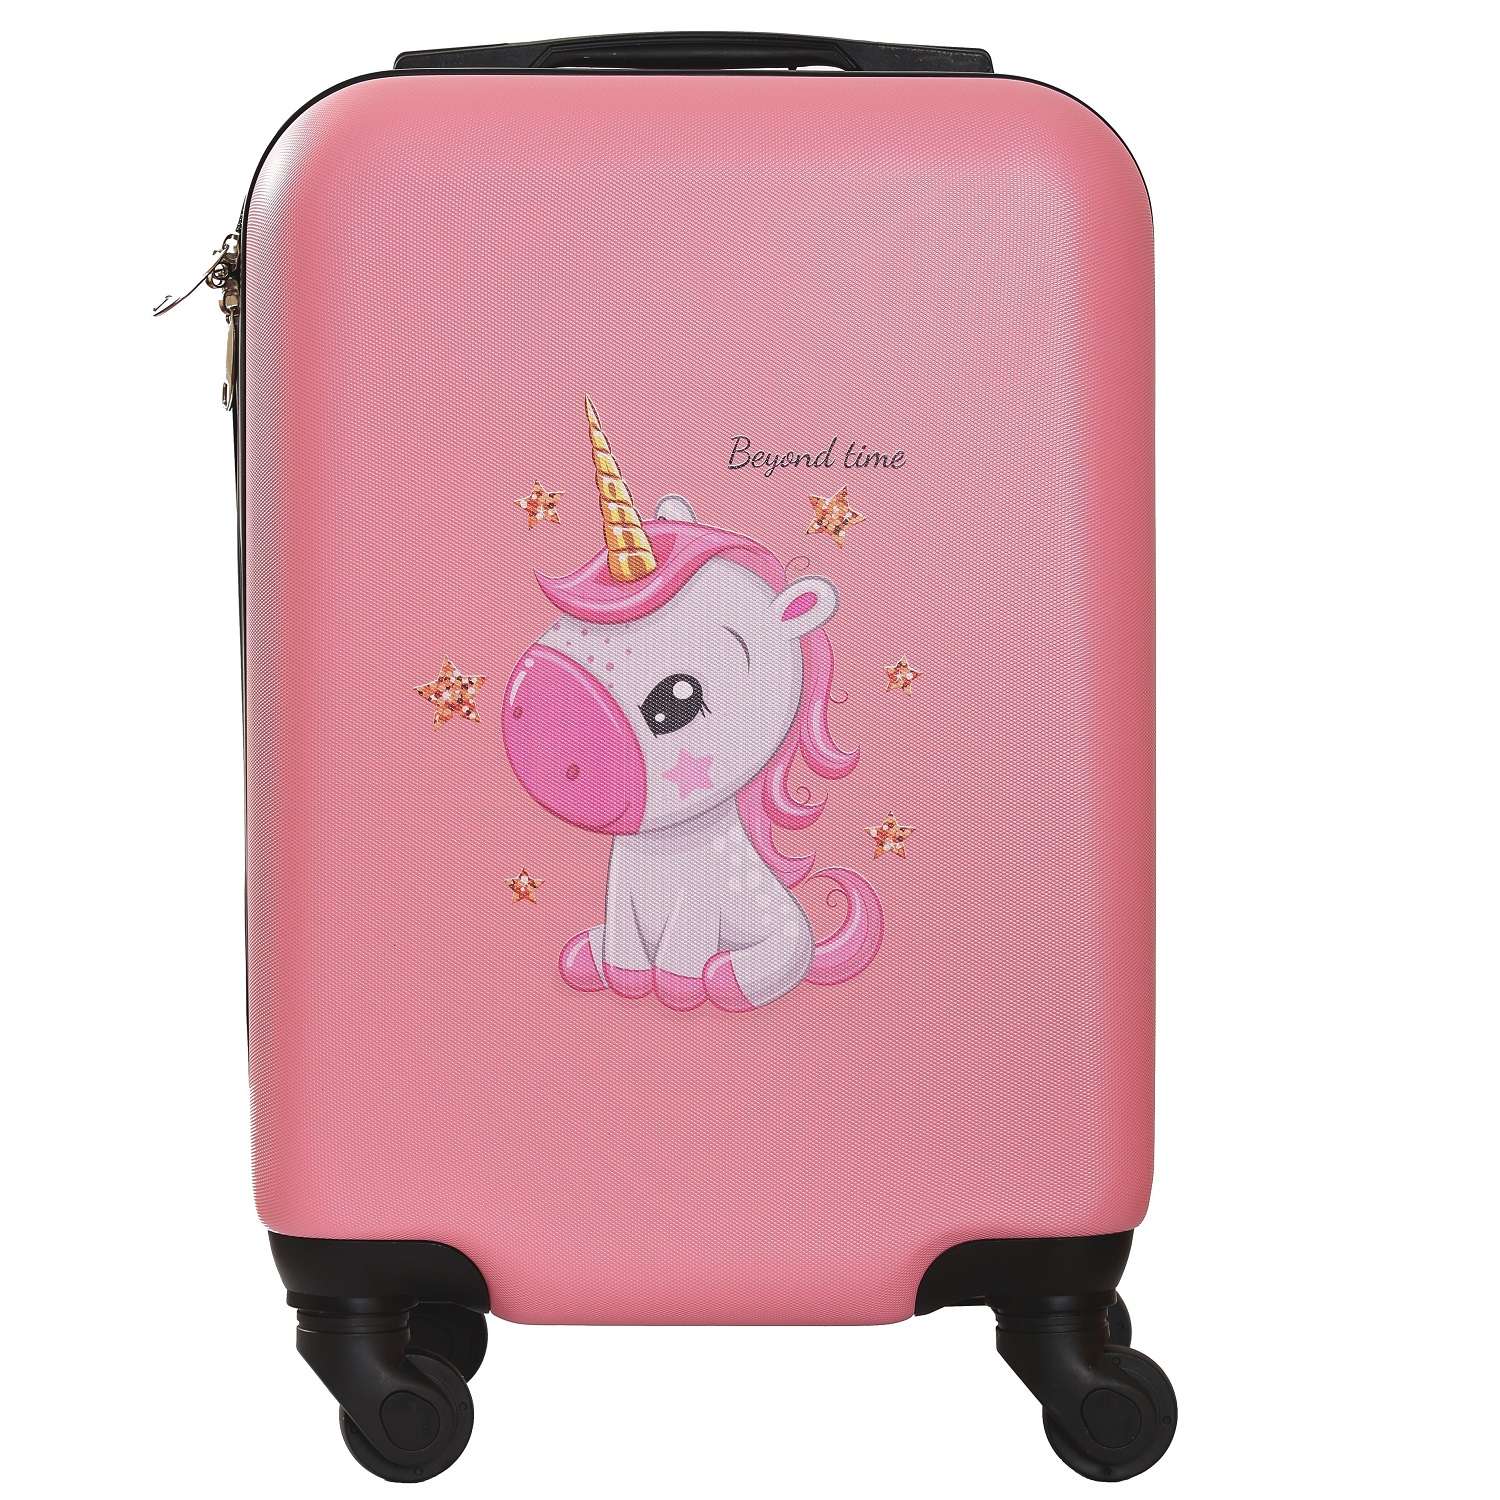 Чемодан единорог. V431 розовый чемодан детский Сова be cool. Чемодан детский "Единорог". Детские розовые чемоданы. Чемодан с единорогом для девочек.